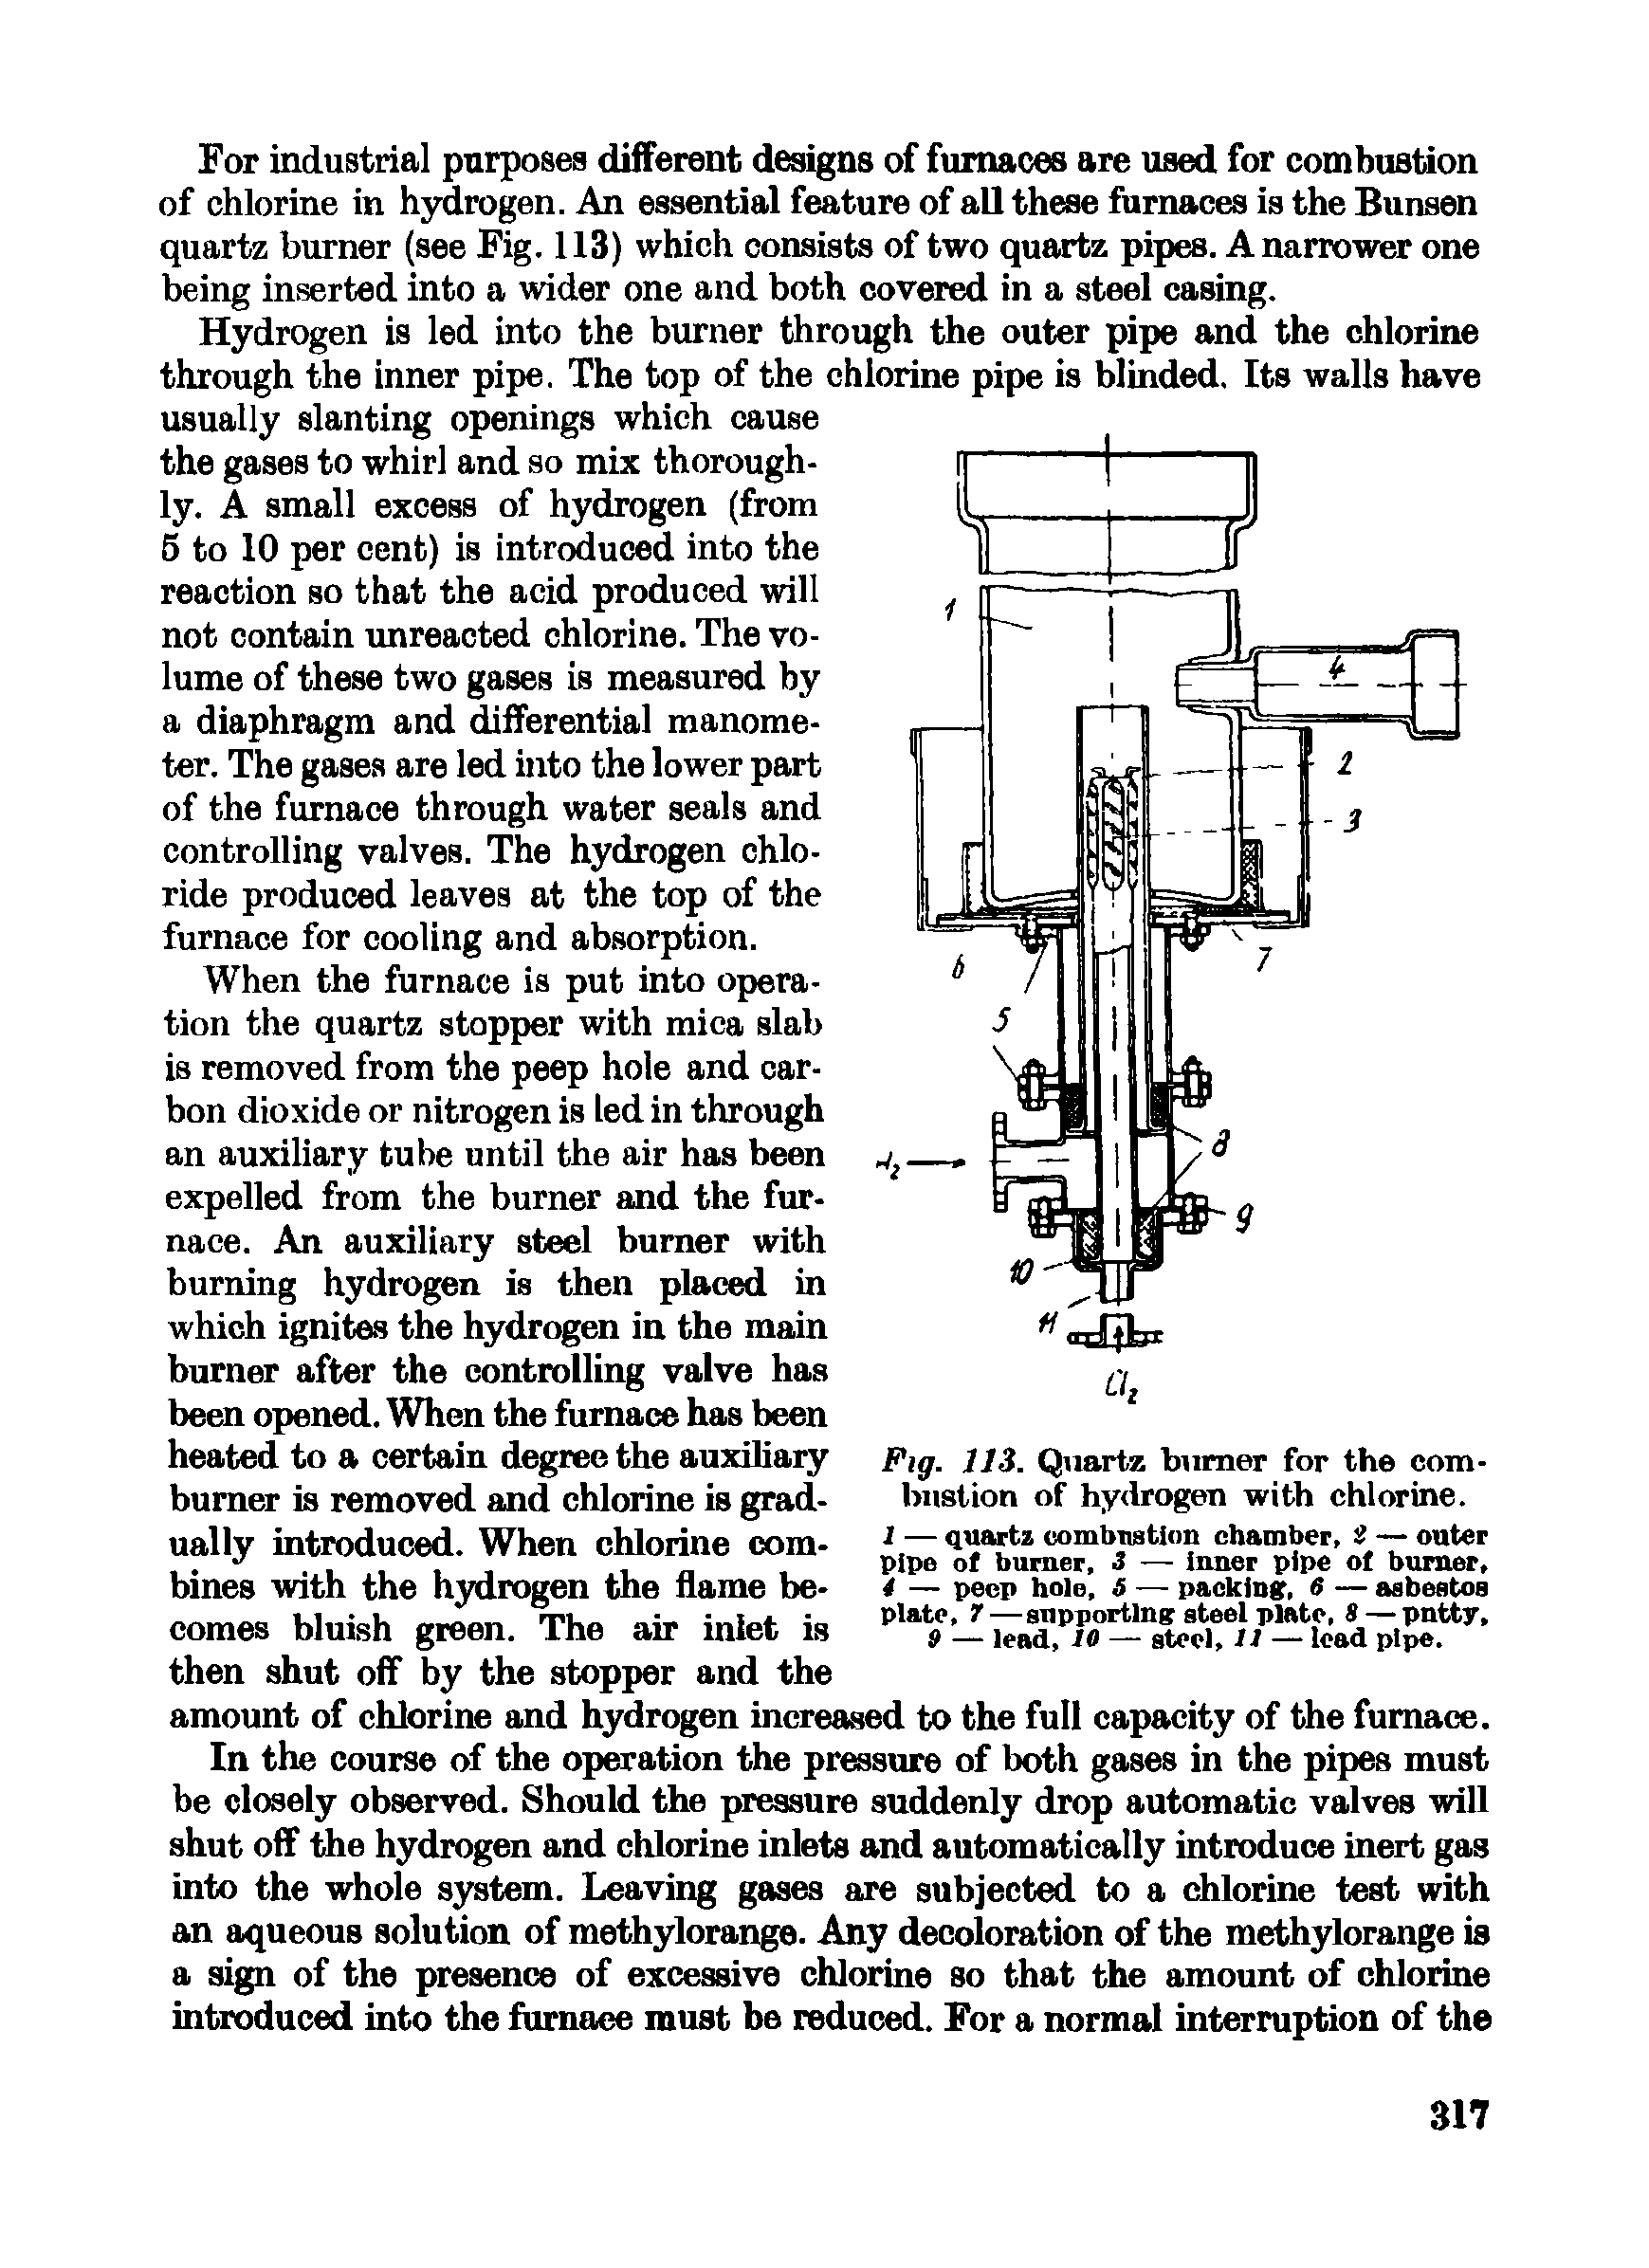 Fig. 113. Quartz burner for the combustion of hydrogen with chlorine.